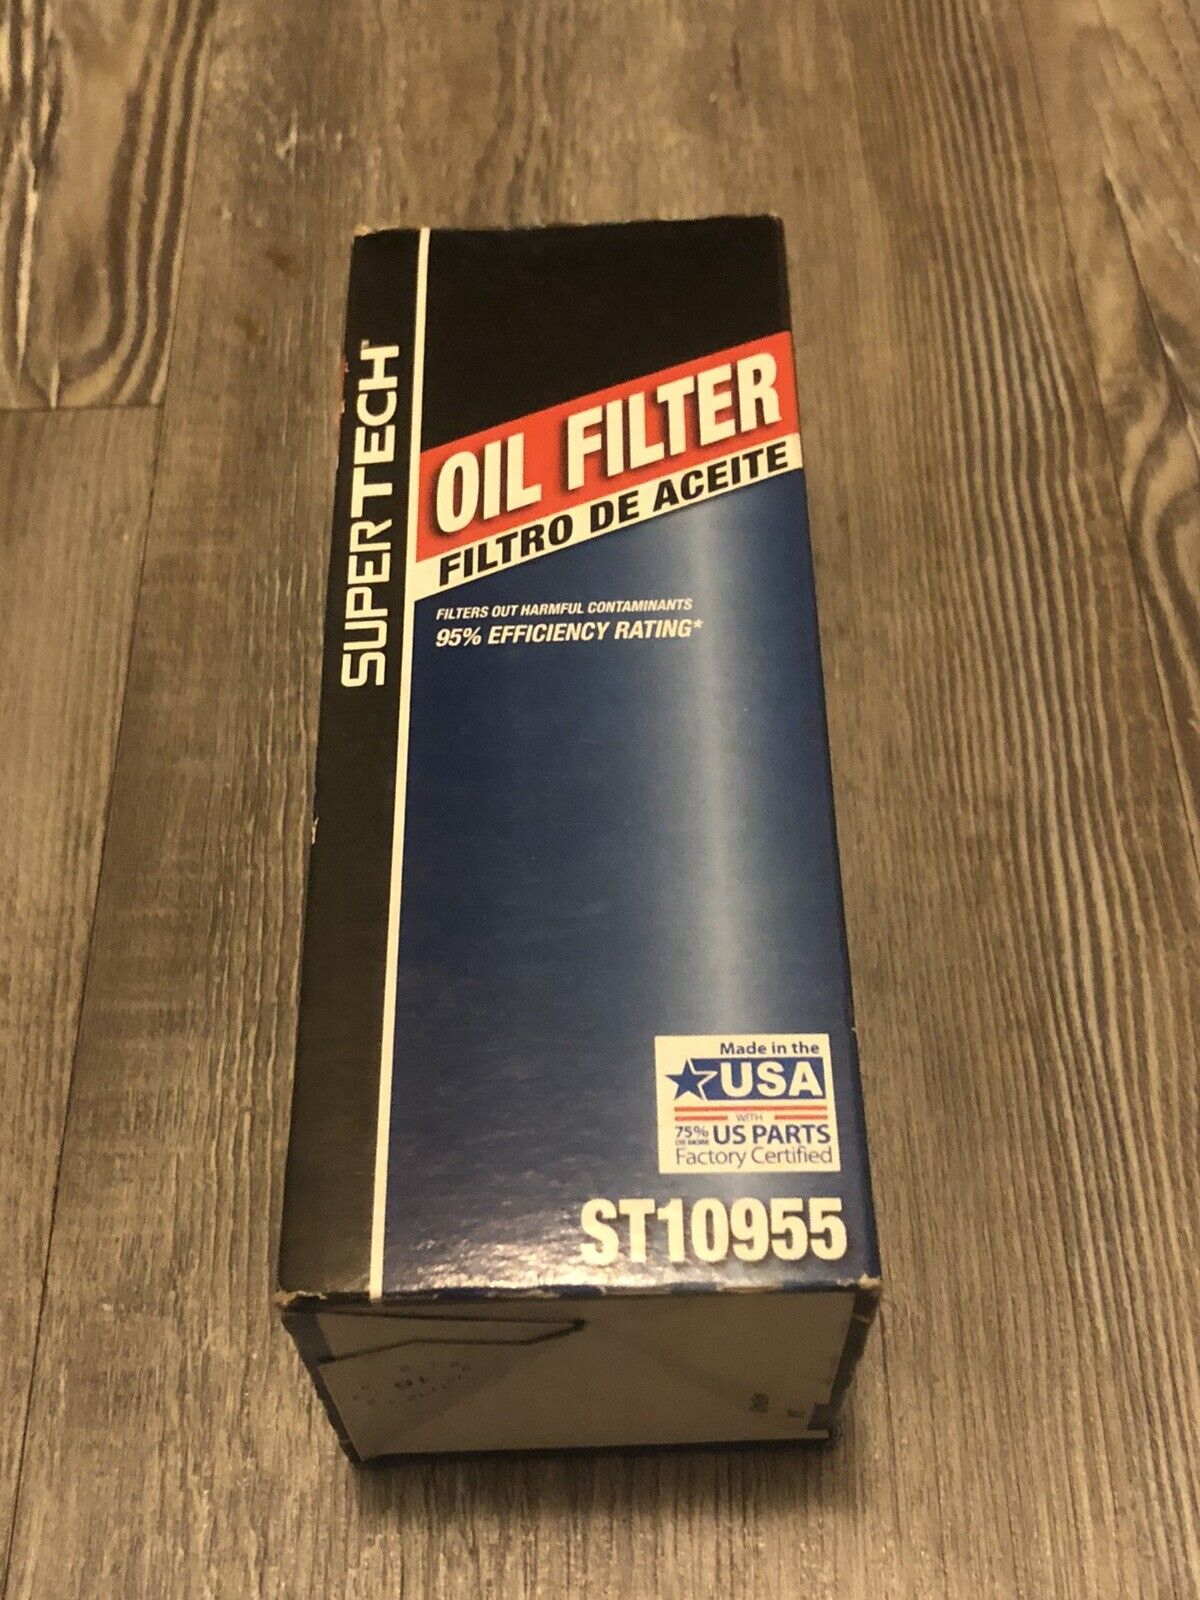 SUPERTECH Oil Filter ST10955  95% Efficiency Rating